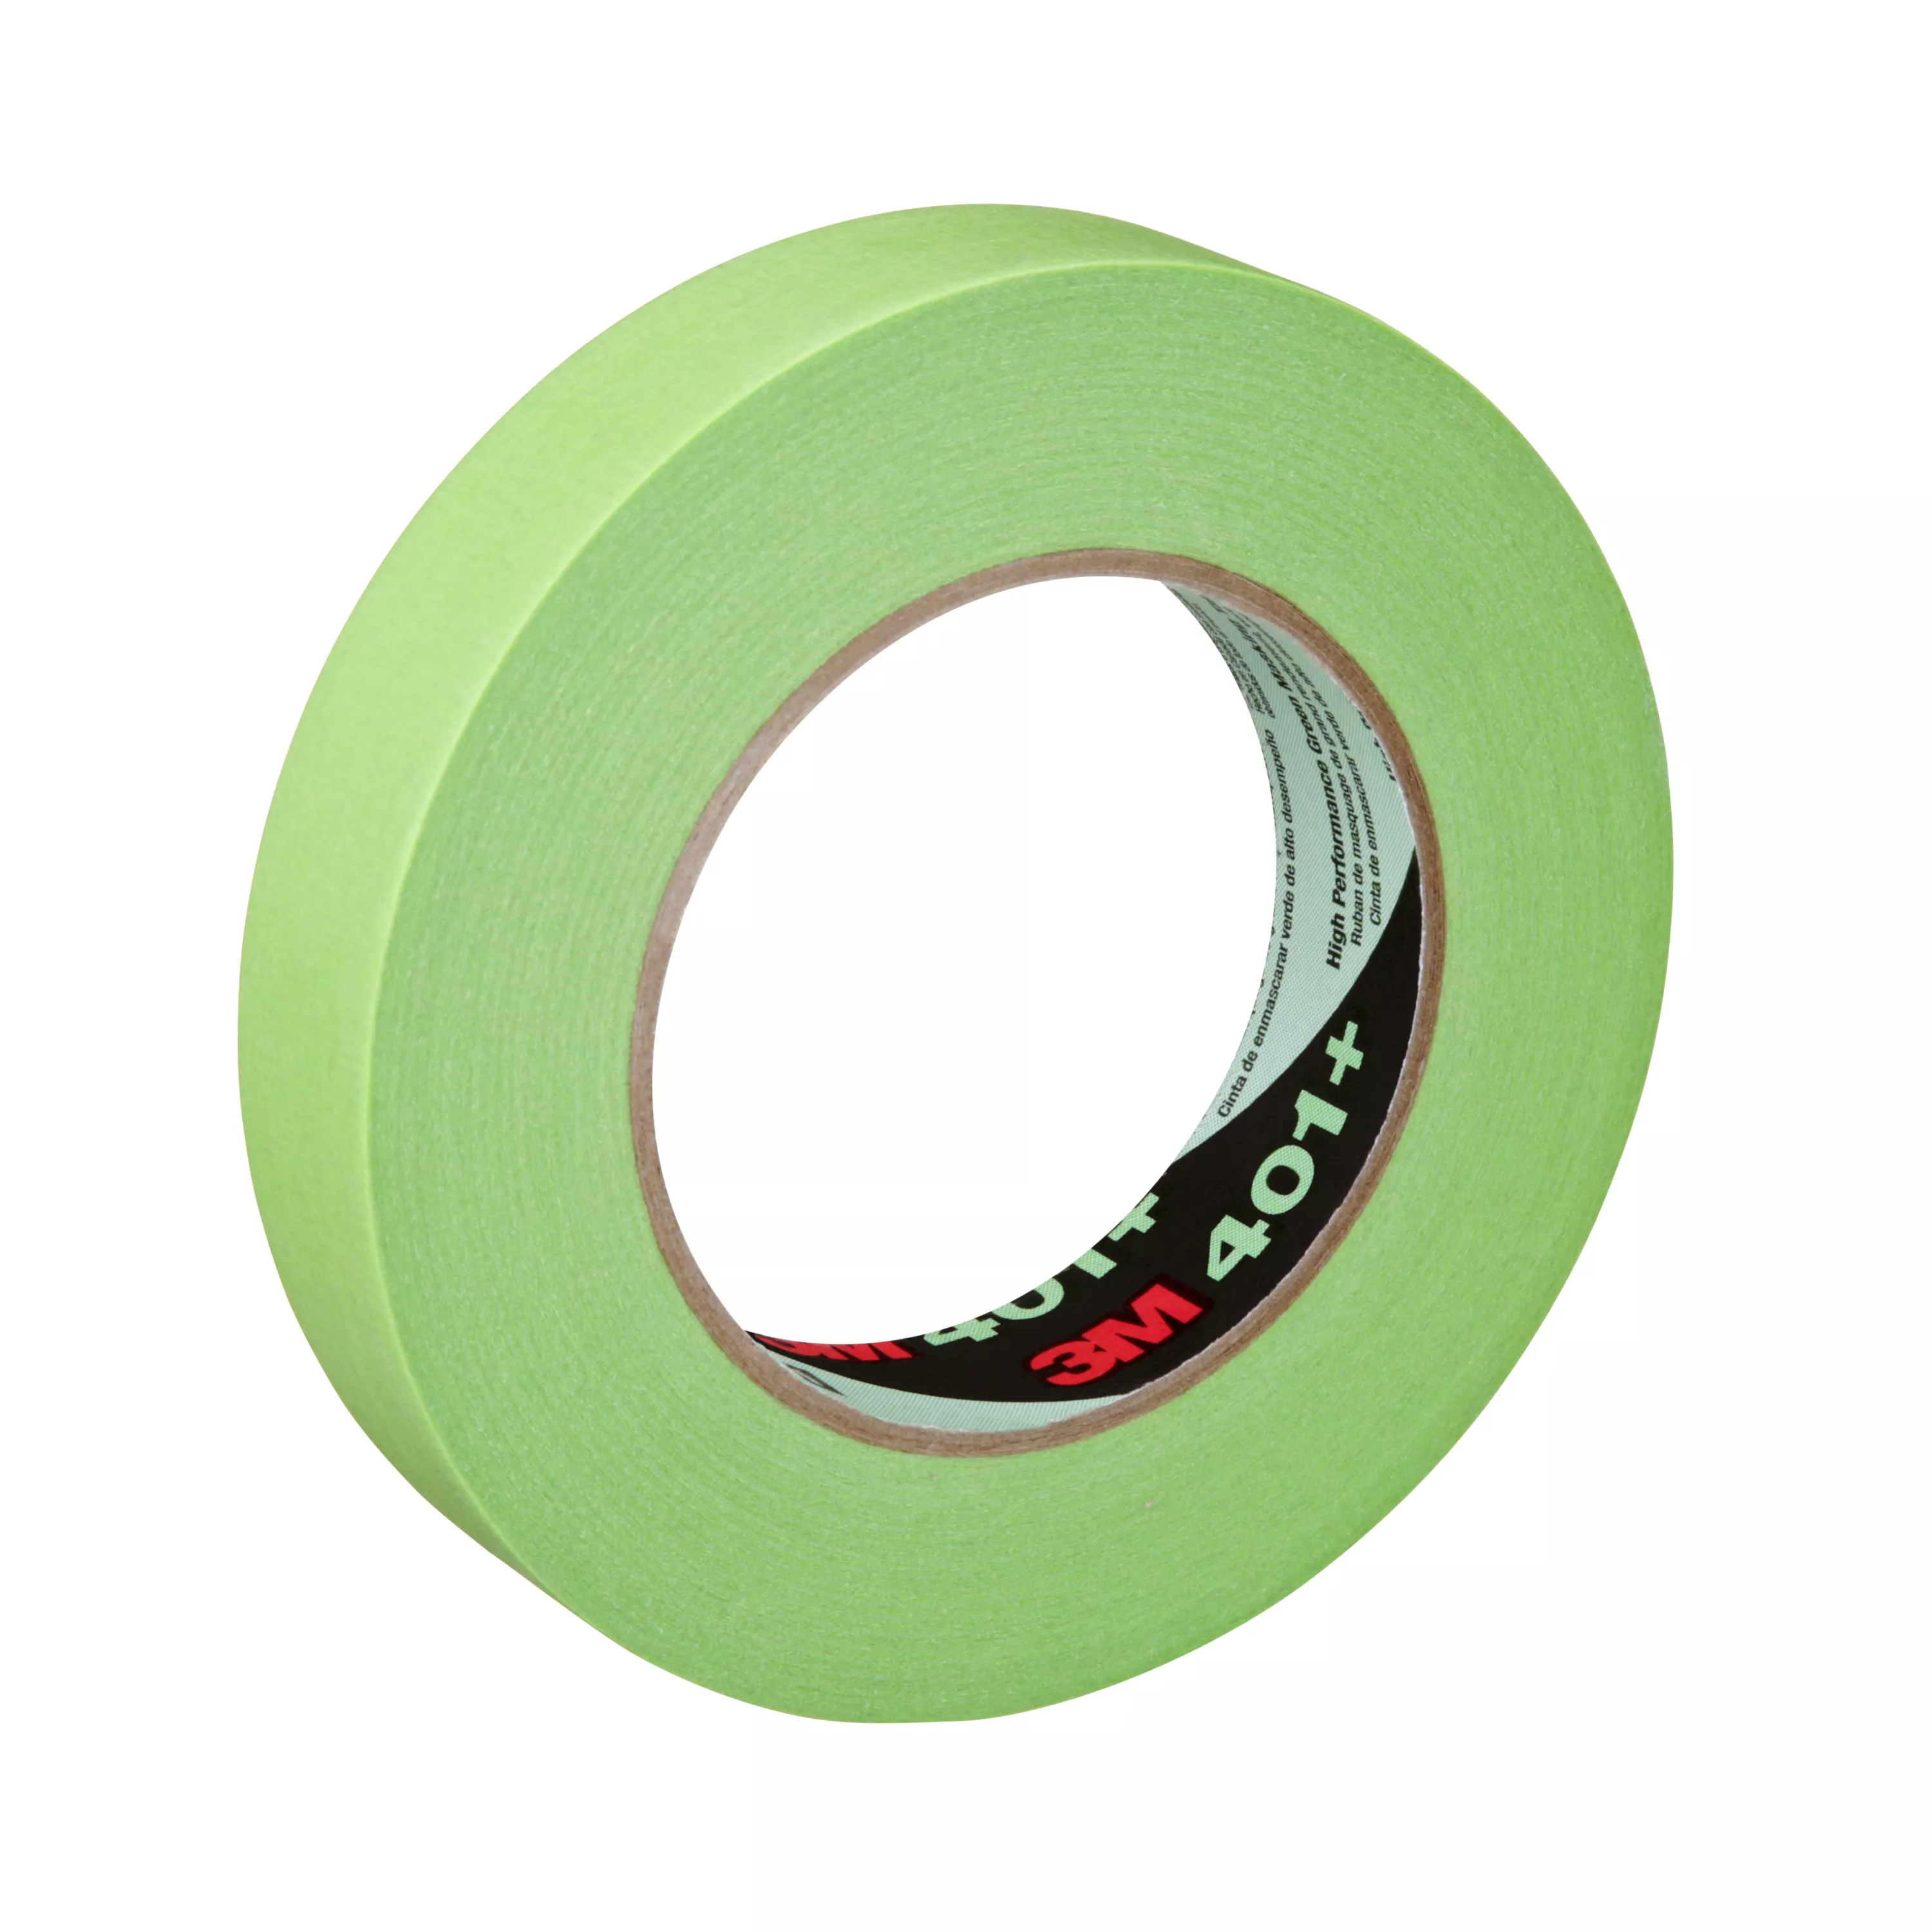 3M™ High Performance Green Masking Tape 401+, 24 mm x 55 m 6.7 mil, 24
Roll/Case